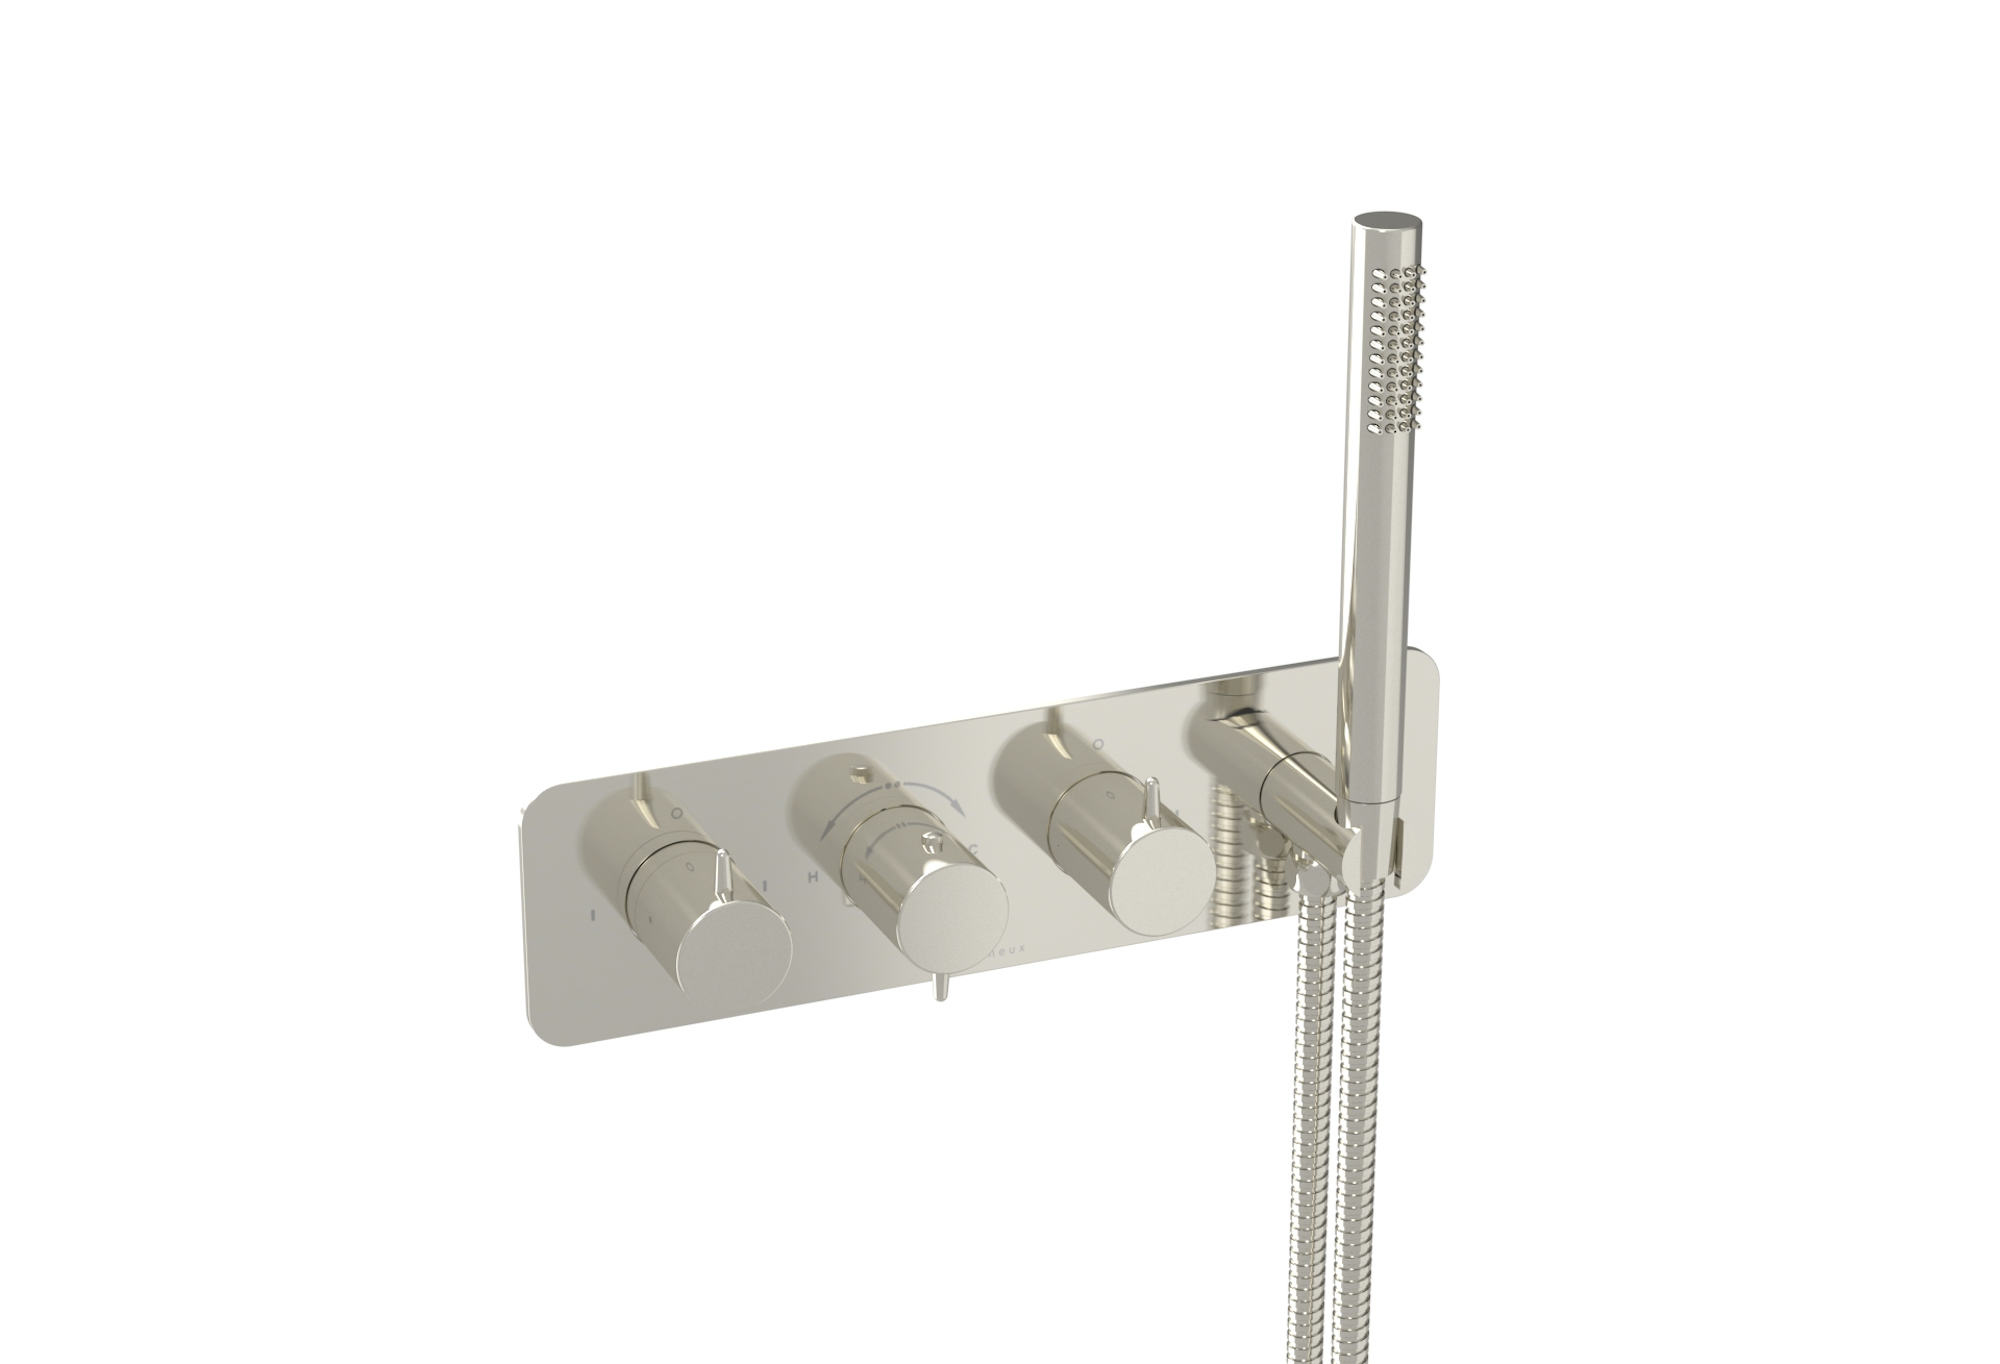 EDEN 3 way thermostatic shower valve kit in landscape with handspray - Brushed Nickel